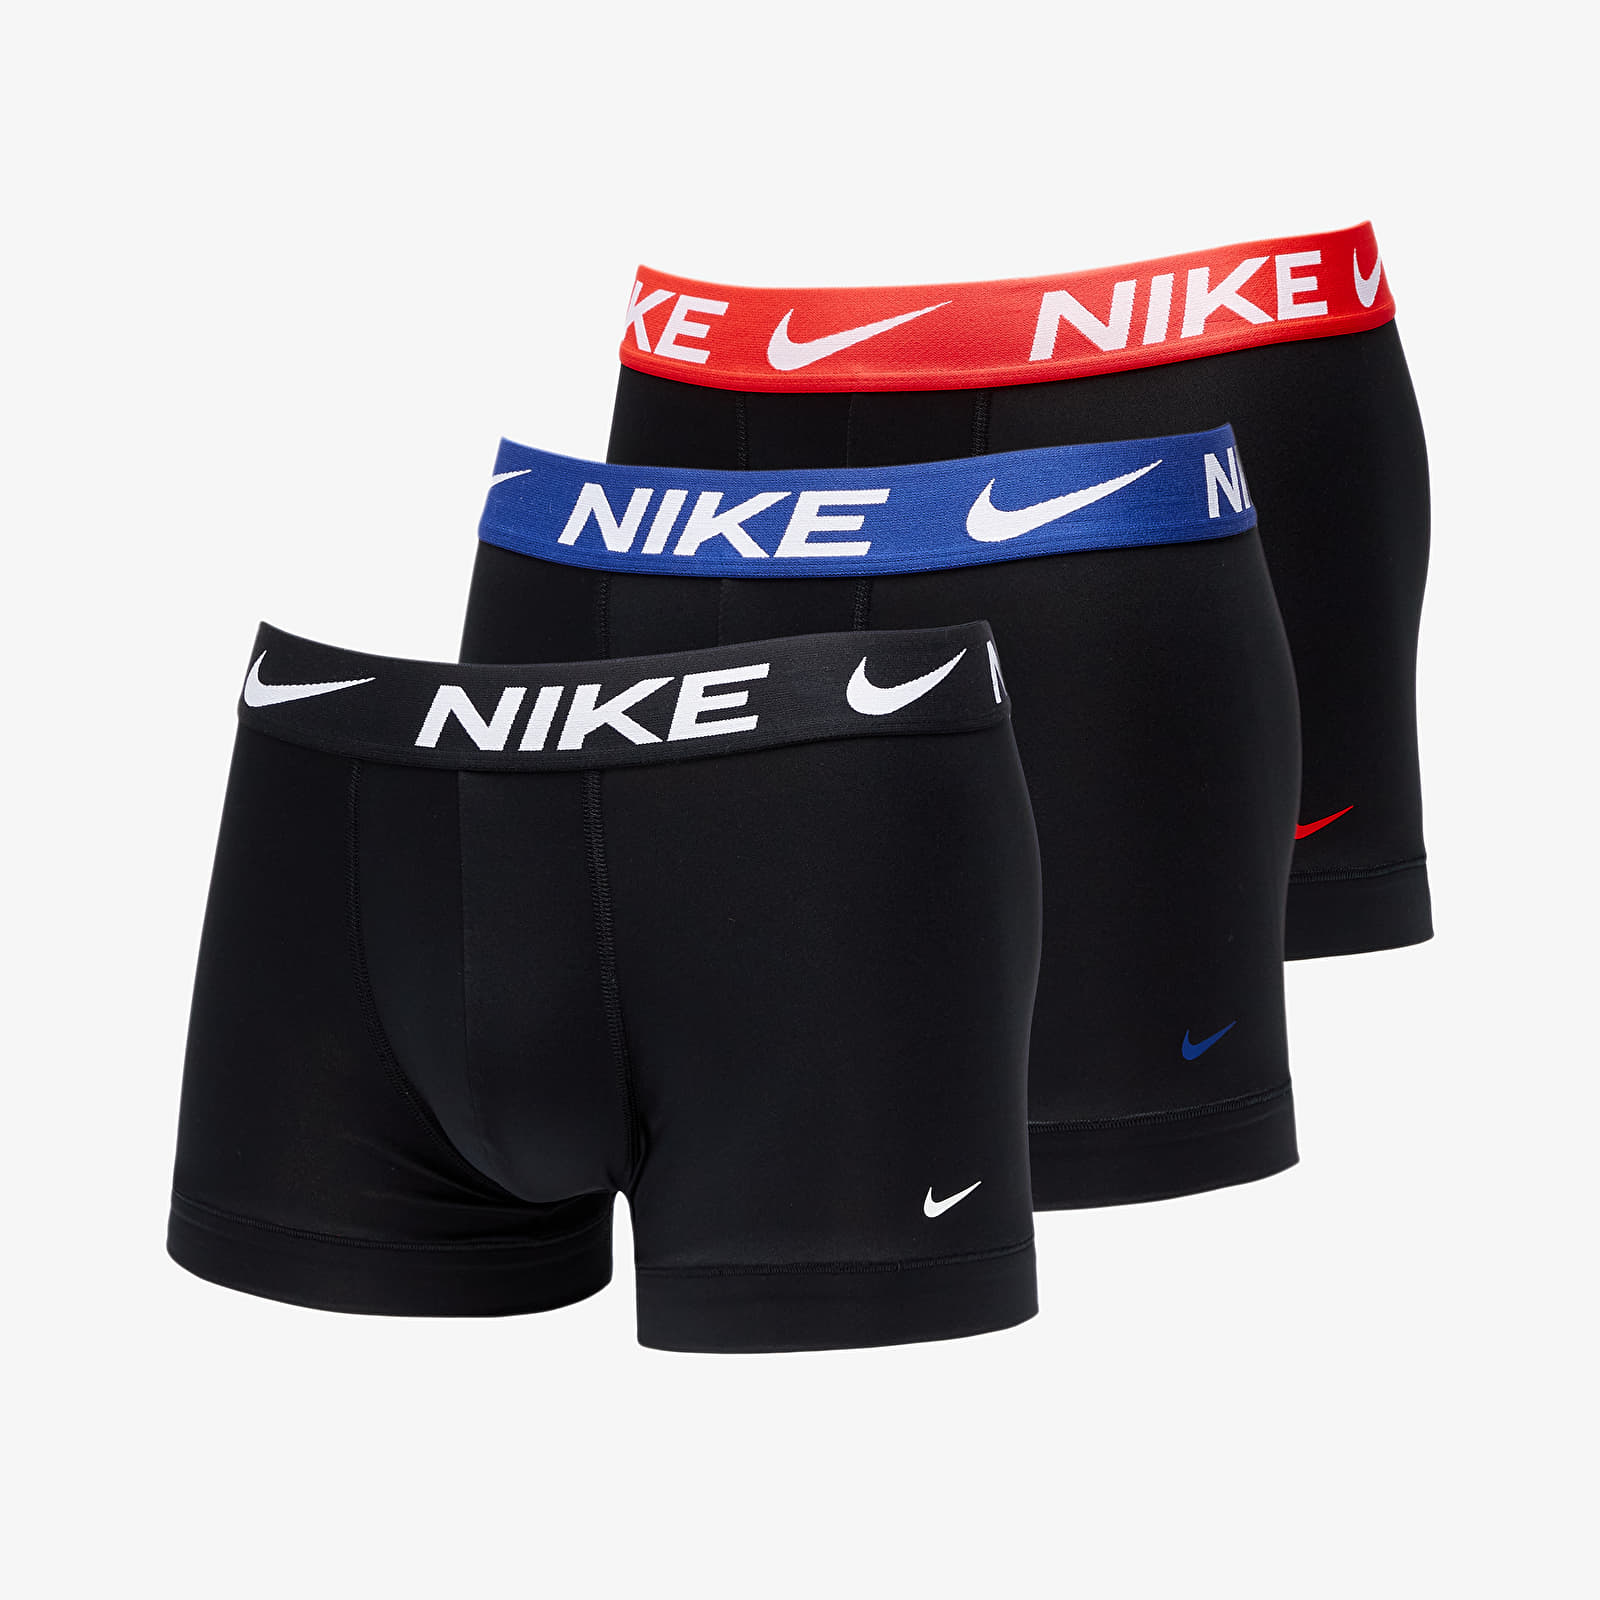 Boxer shorts Nike Dri-FIT Essential Micro Trunk 3-Pack Black/ Iren Red WB/ Deep Royal WB/ Black WB